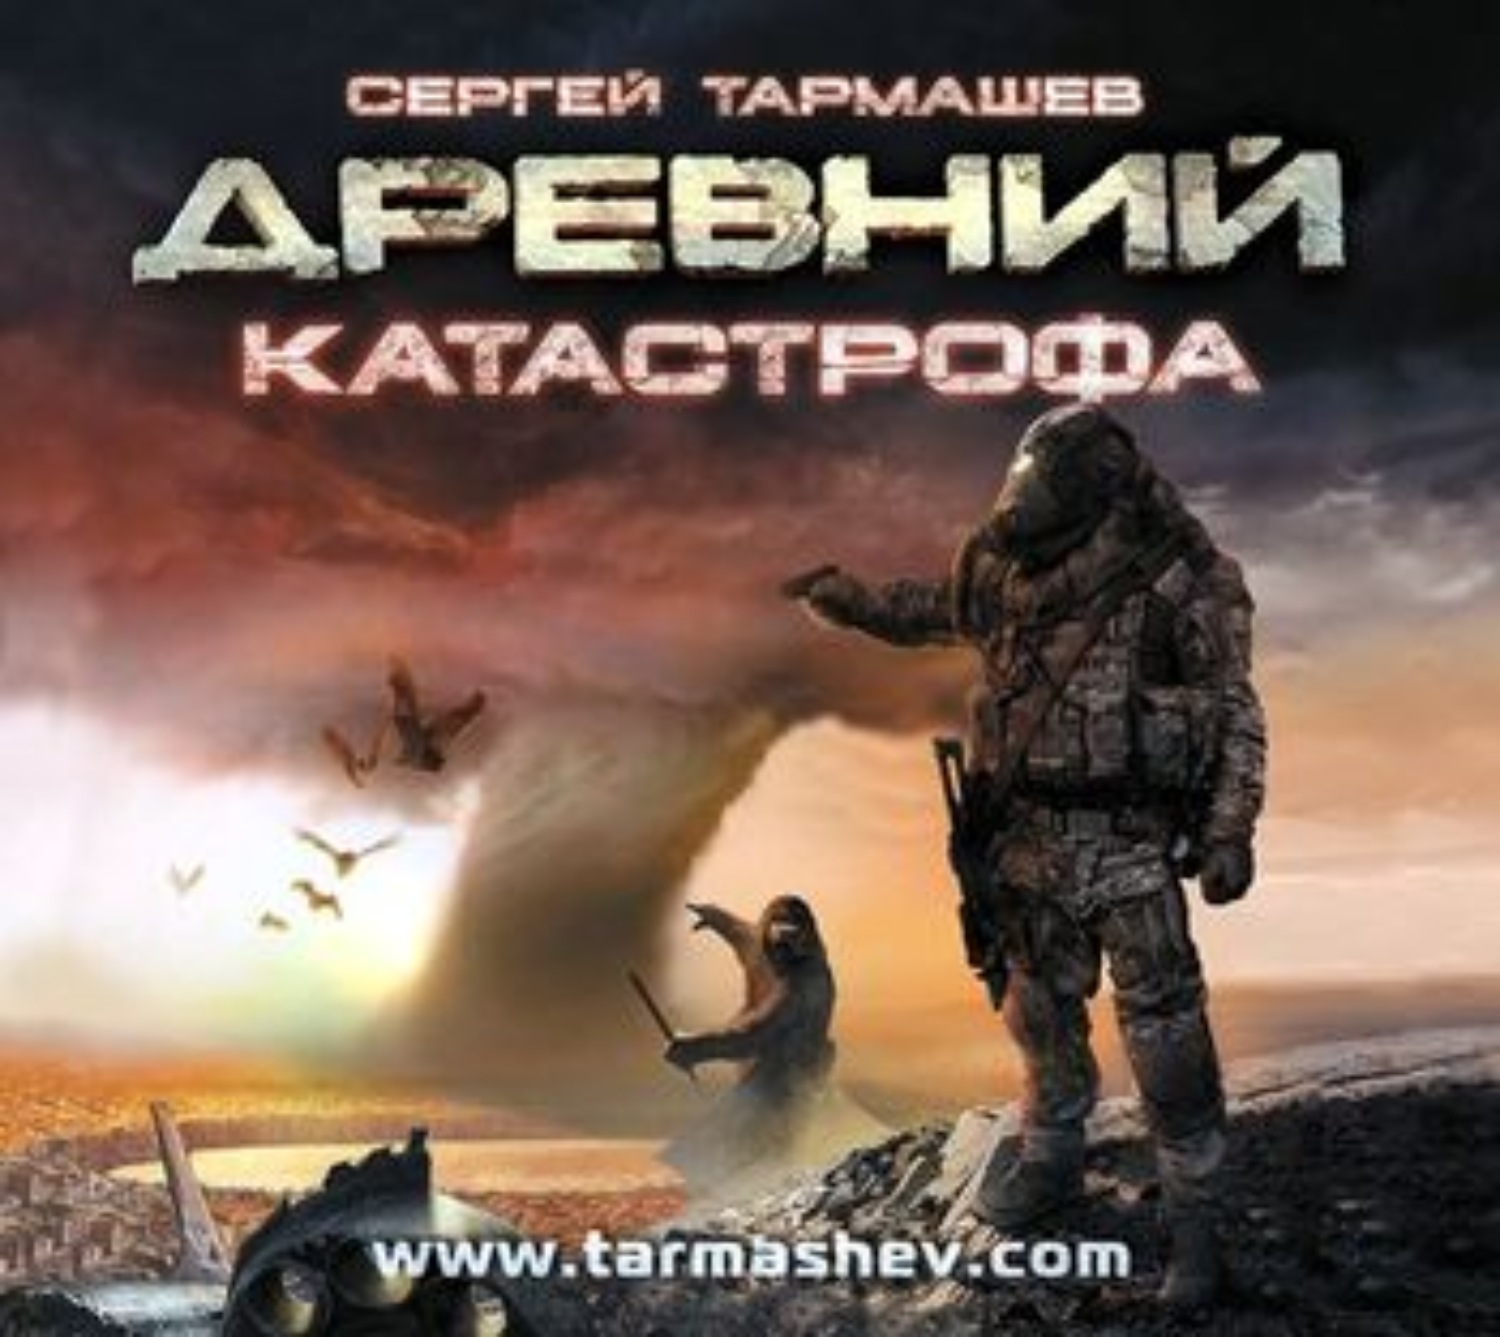 Тармашев книги аудиокниги